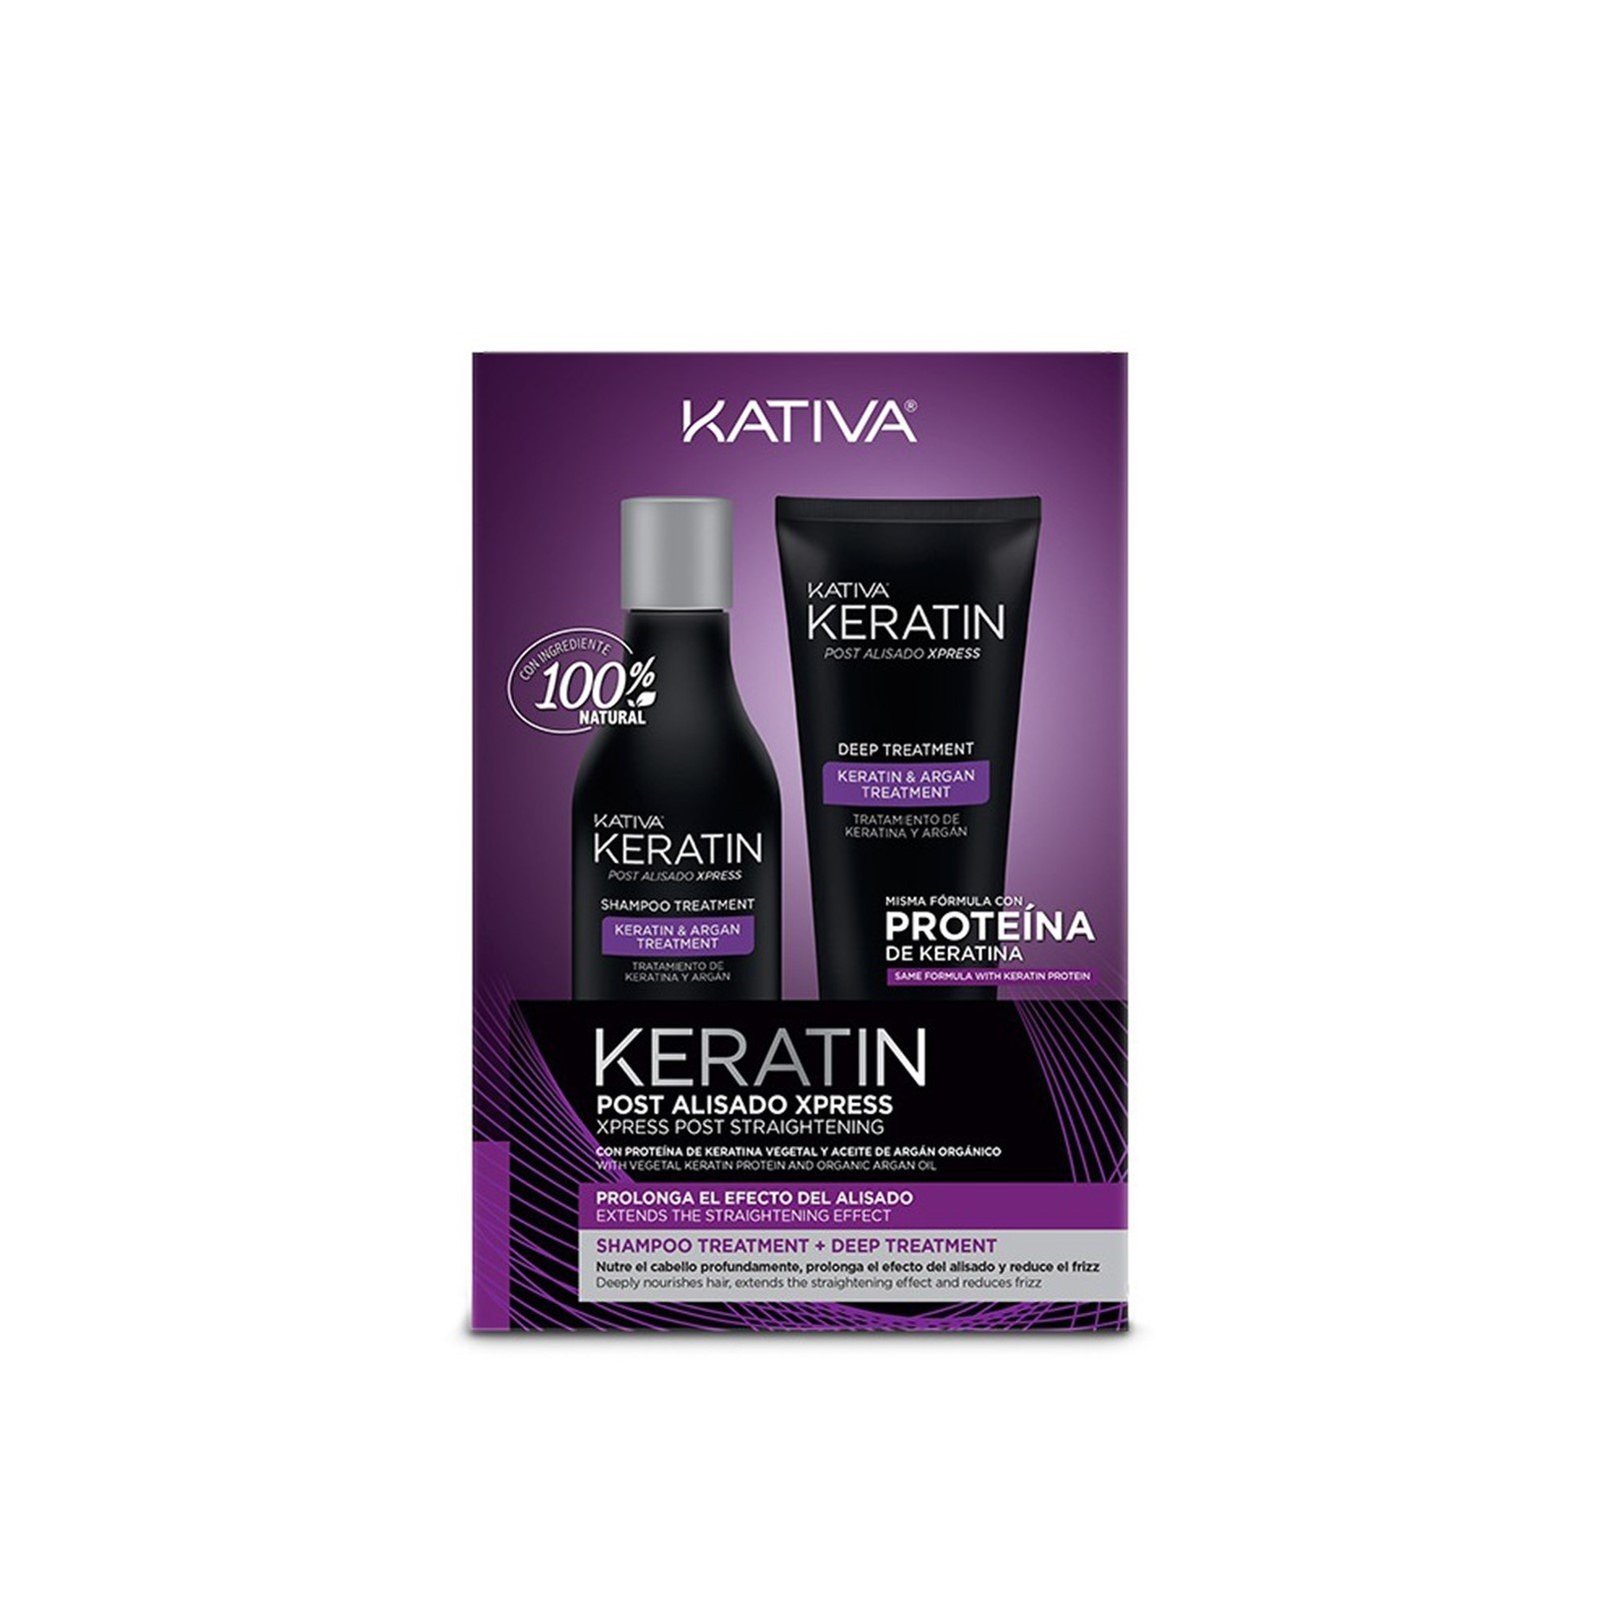 Kativa Keratin Xpress Post Straightening Kit